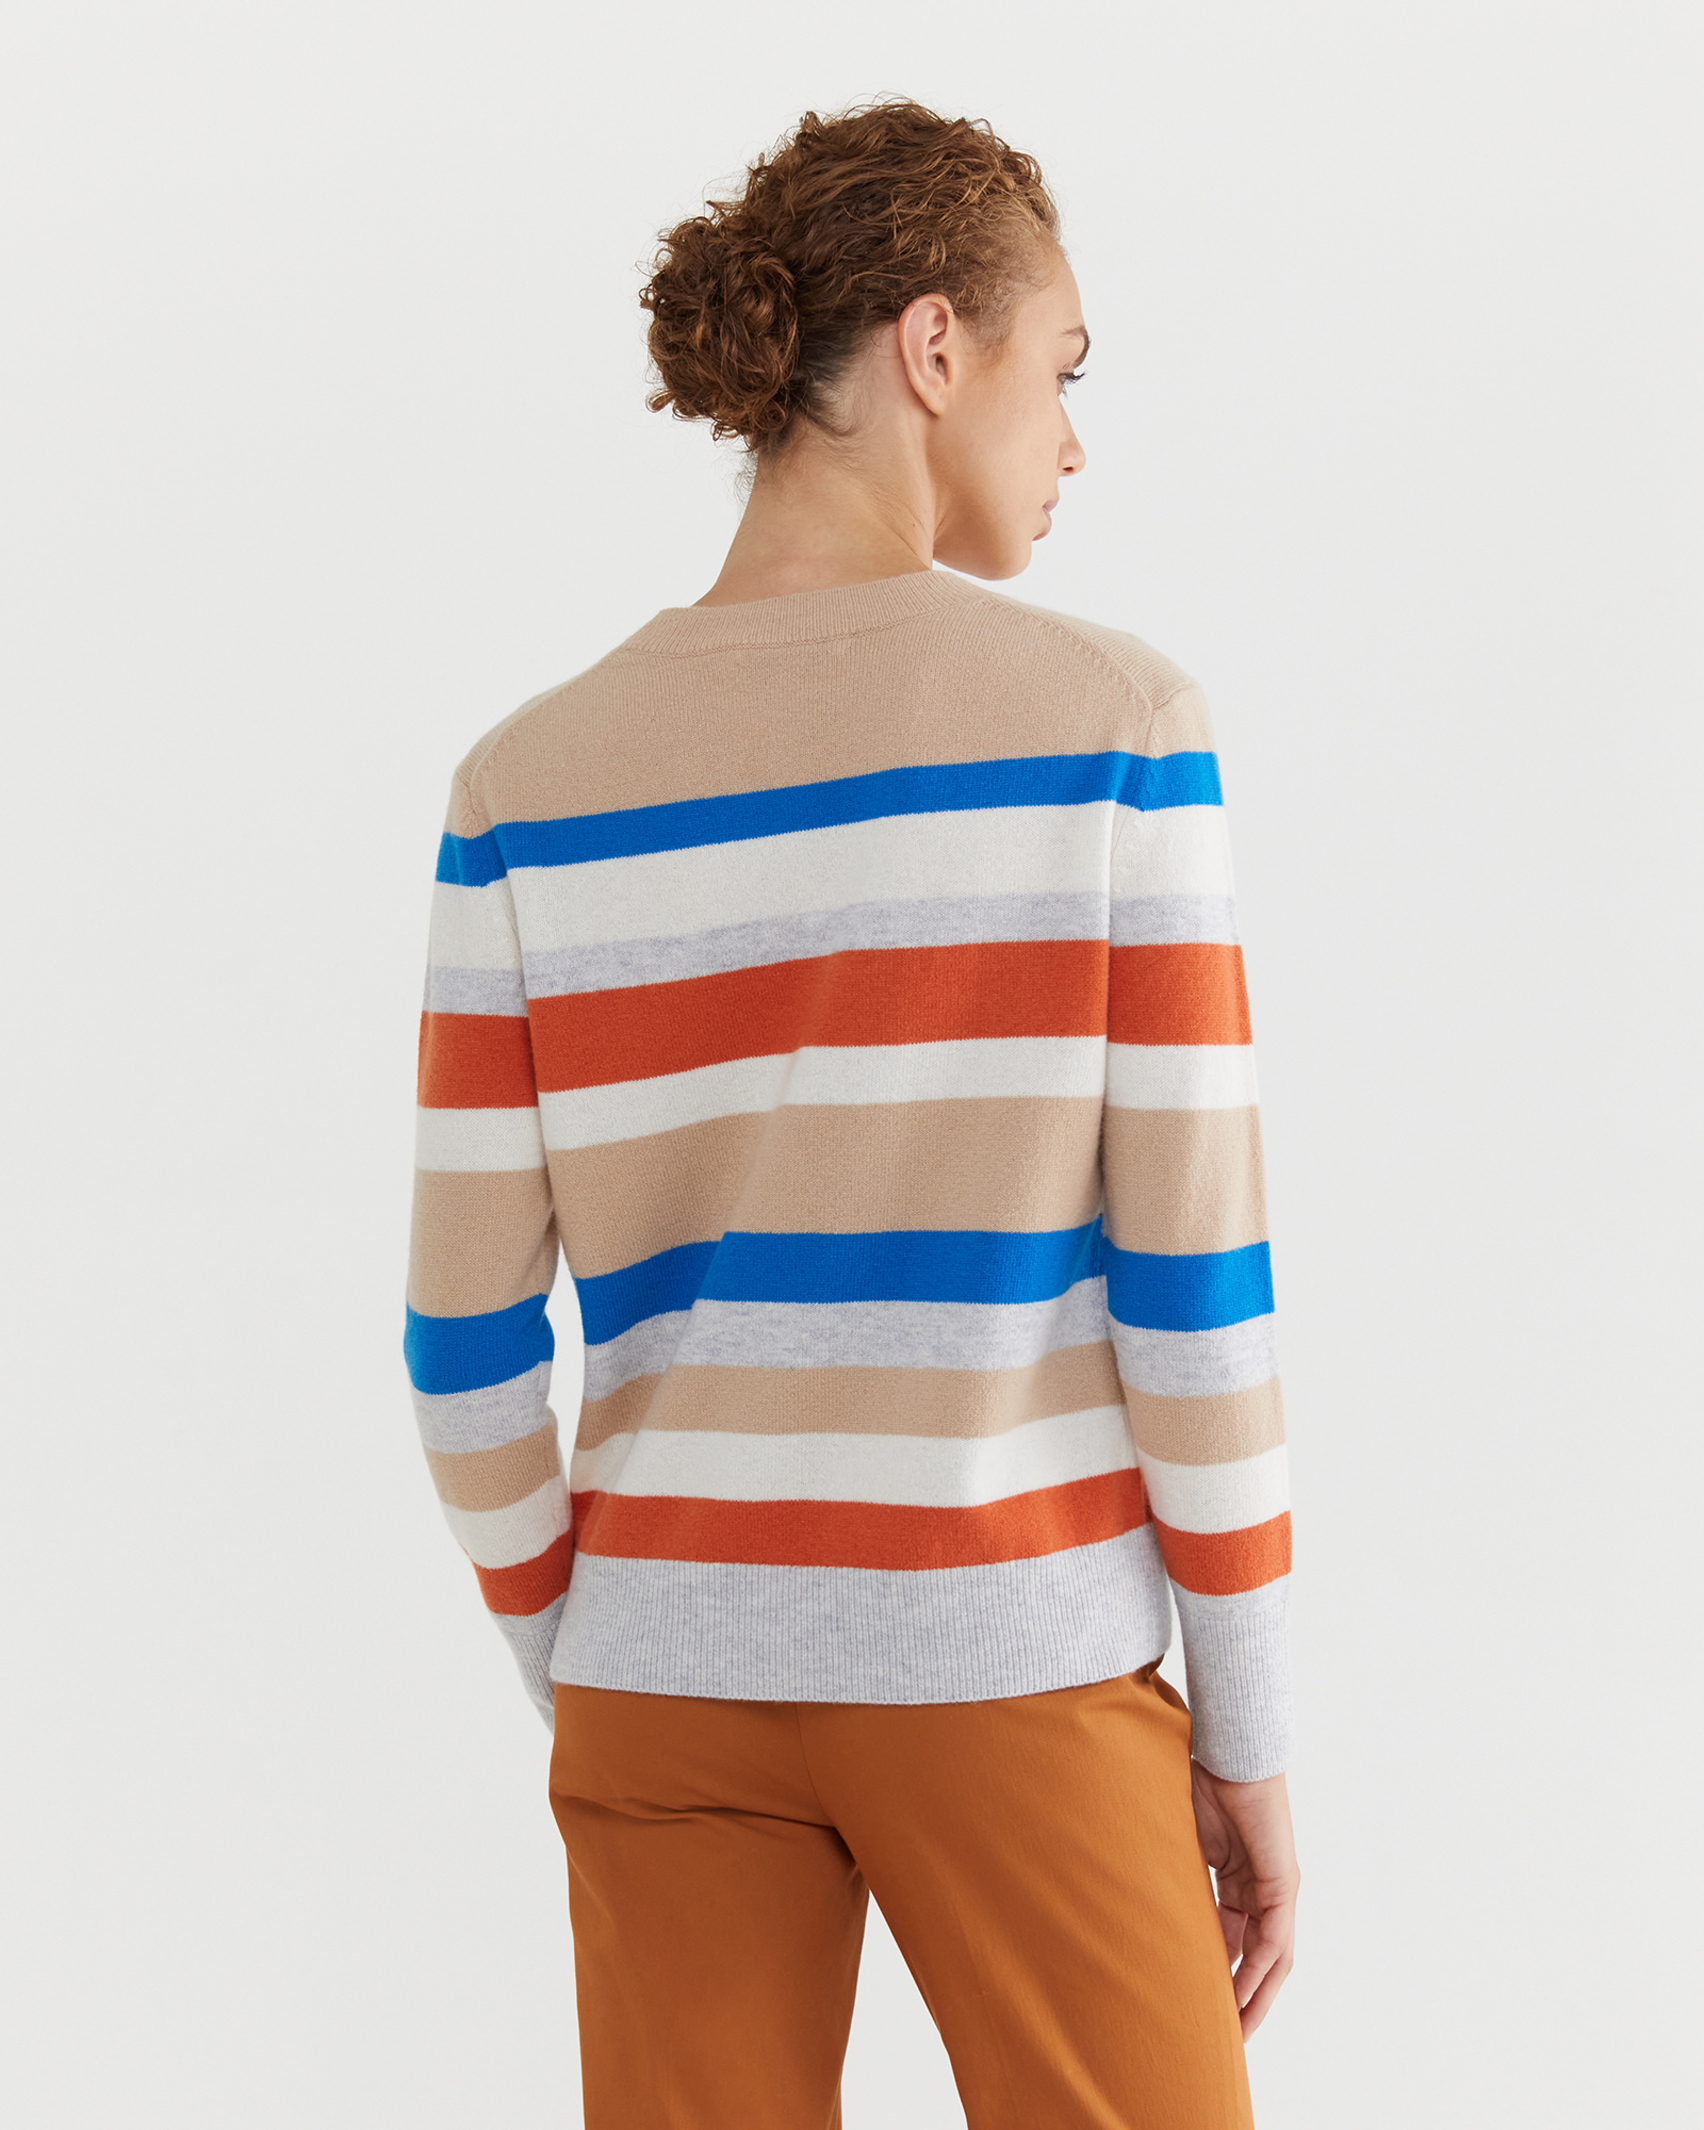 Sunshine Stripe Sweater in MULTI